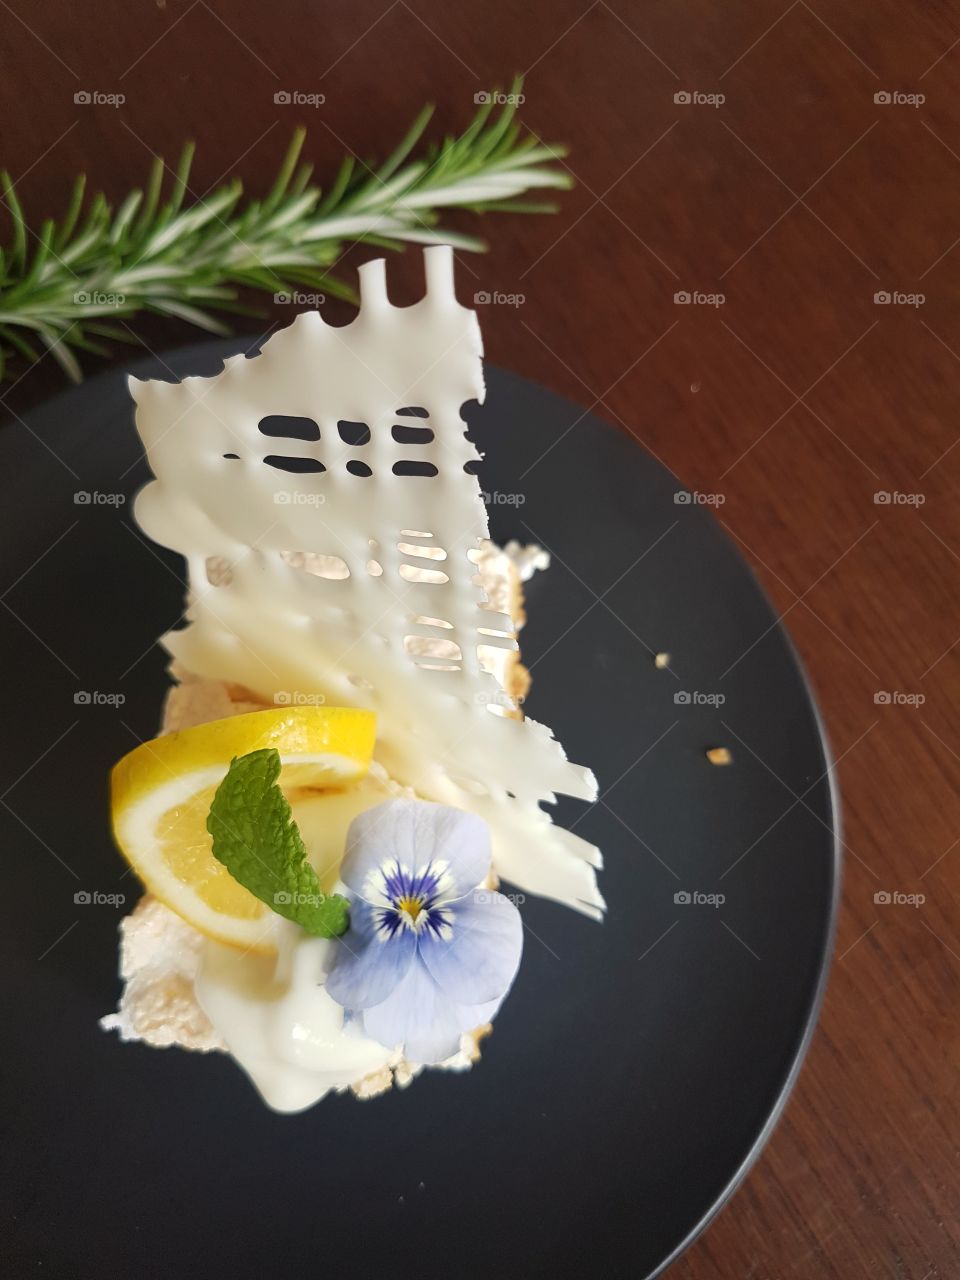 Resturant Desert Lemon Meringue Cake with white chocolate and edible flower